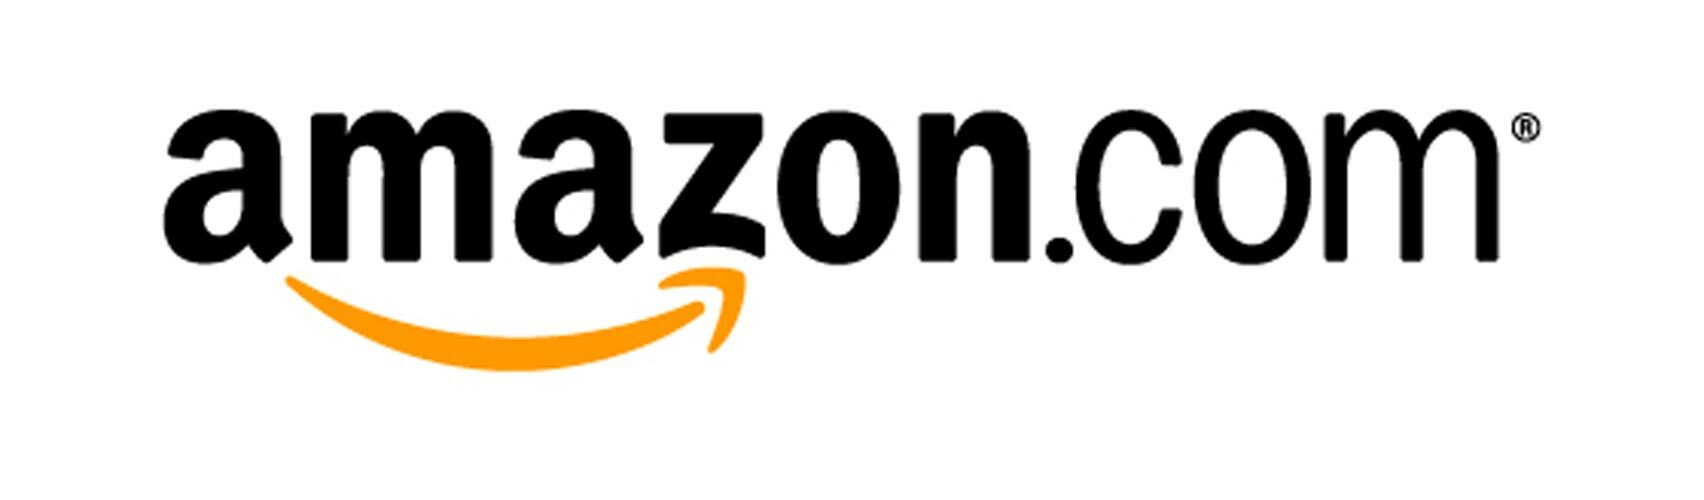 Компания Amazon запустила стриминг-сервис